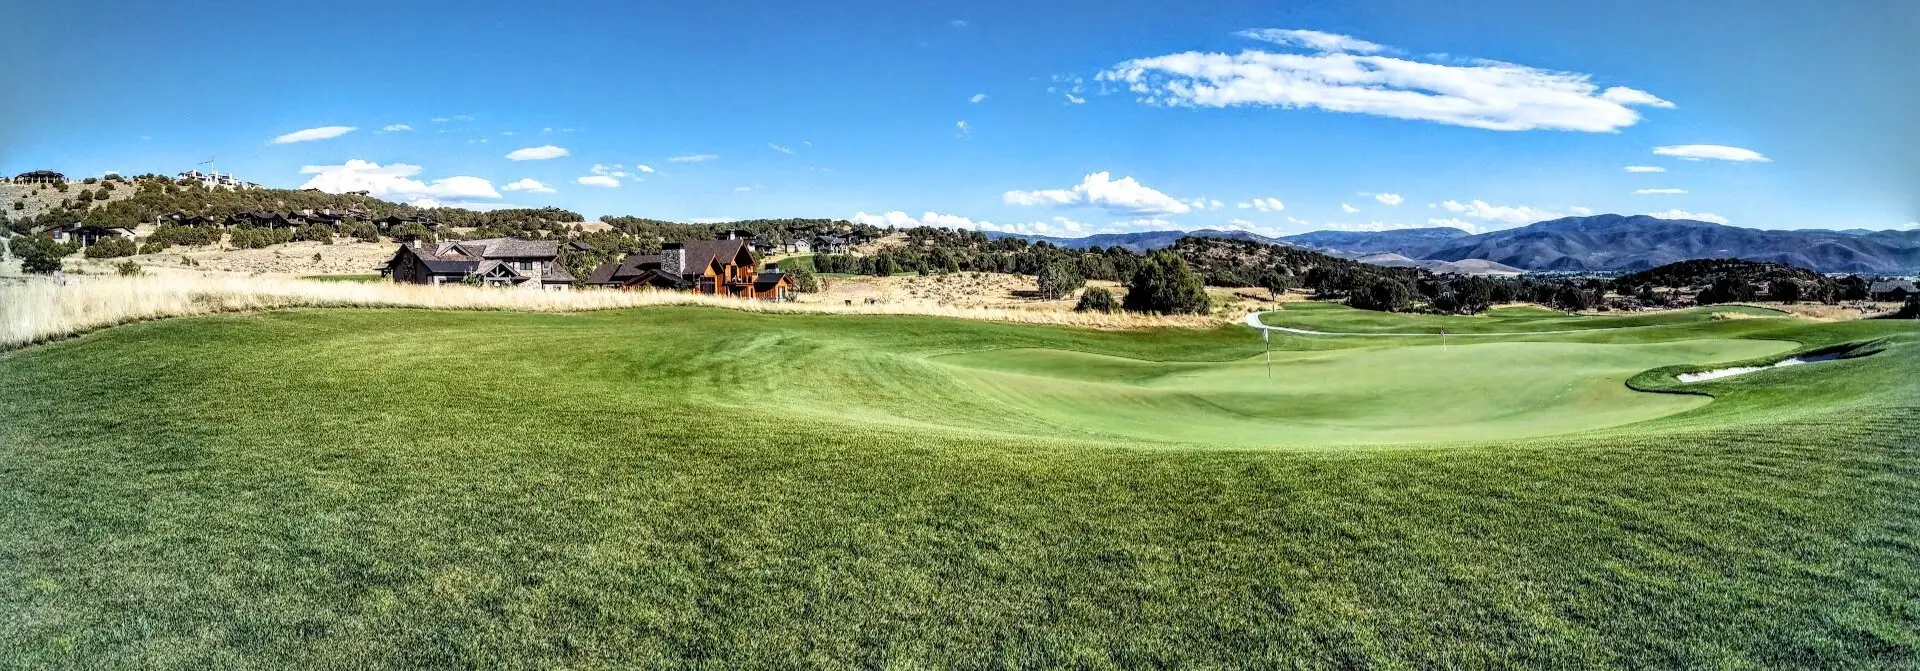 Red Ledges Golf Community Real Estate for Sale